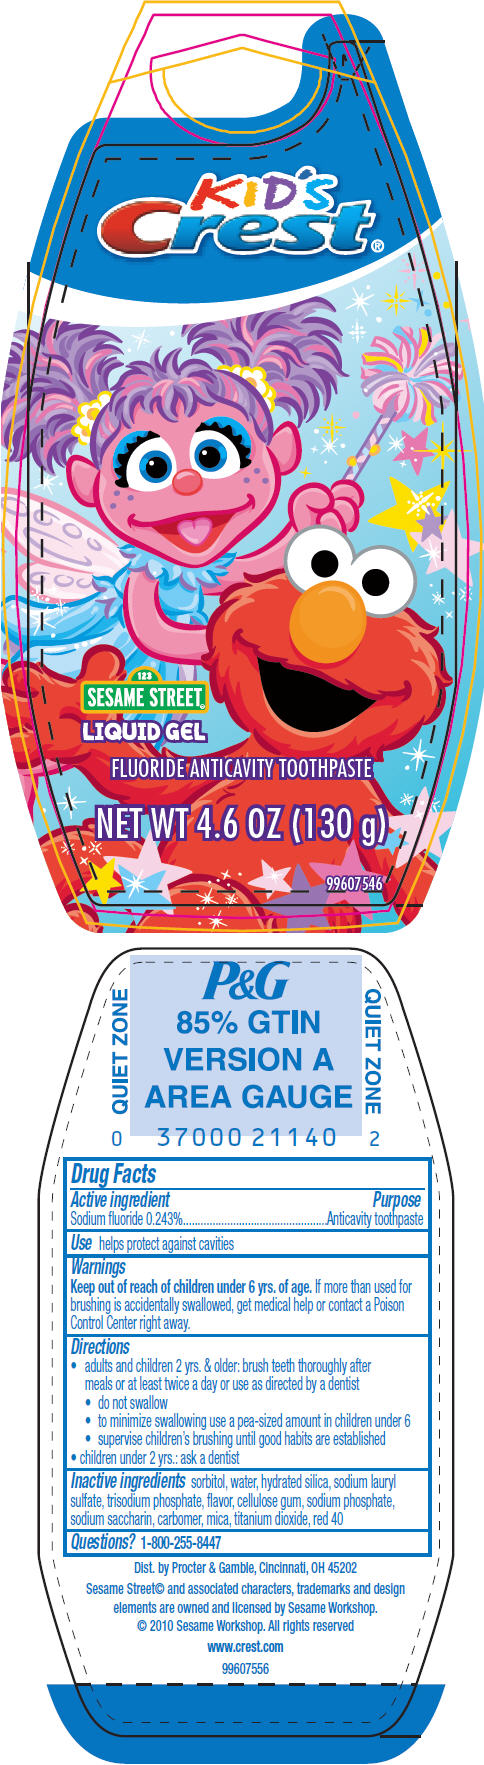 Principal Display Panel - 130 g Bottle Label